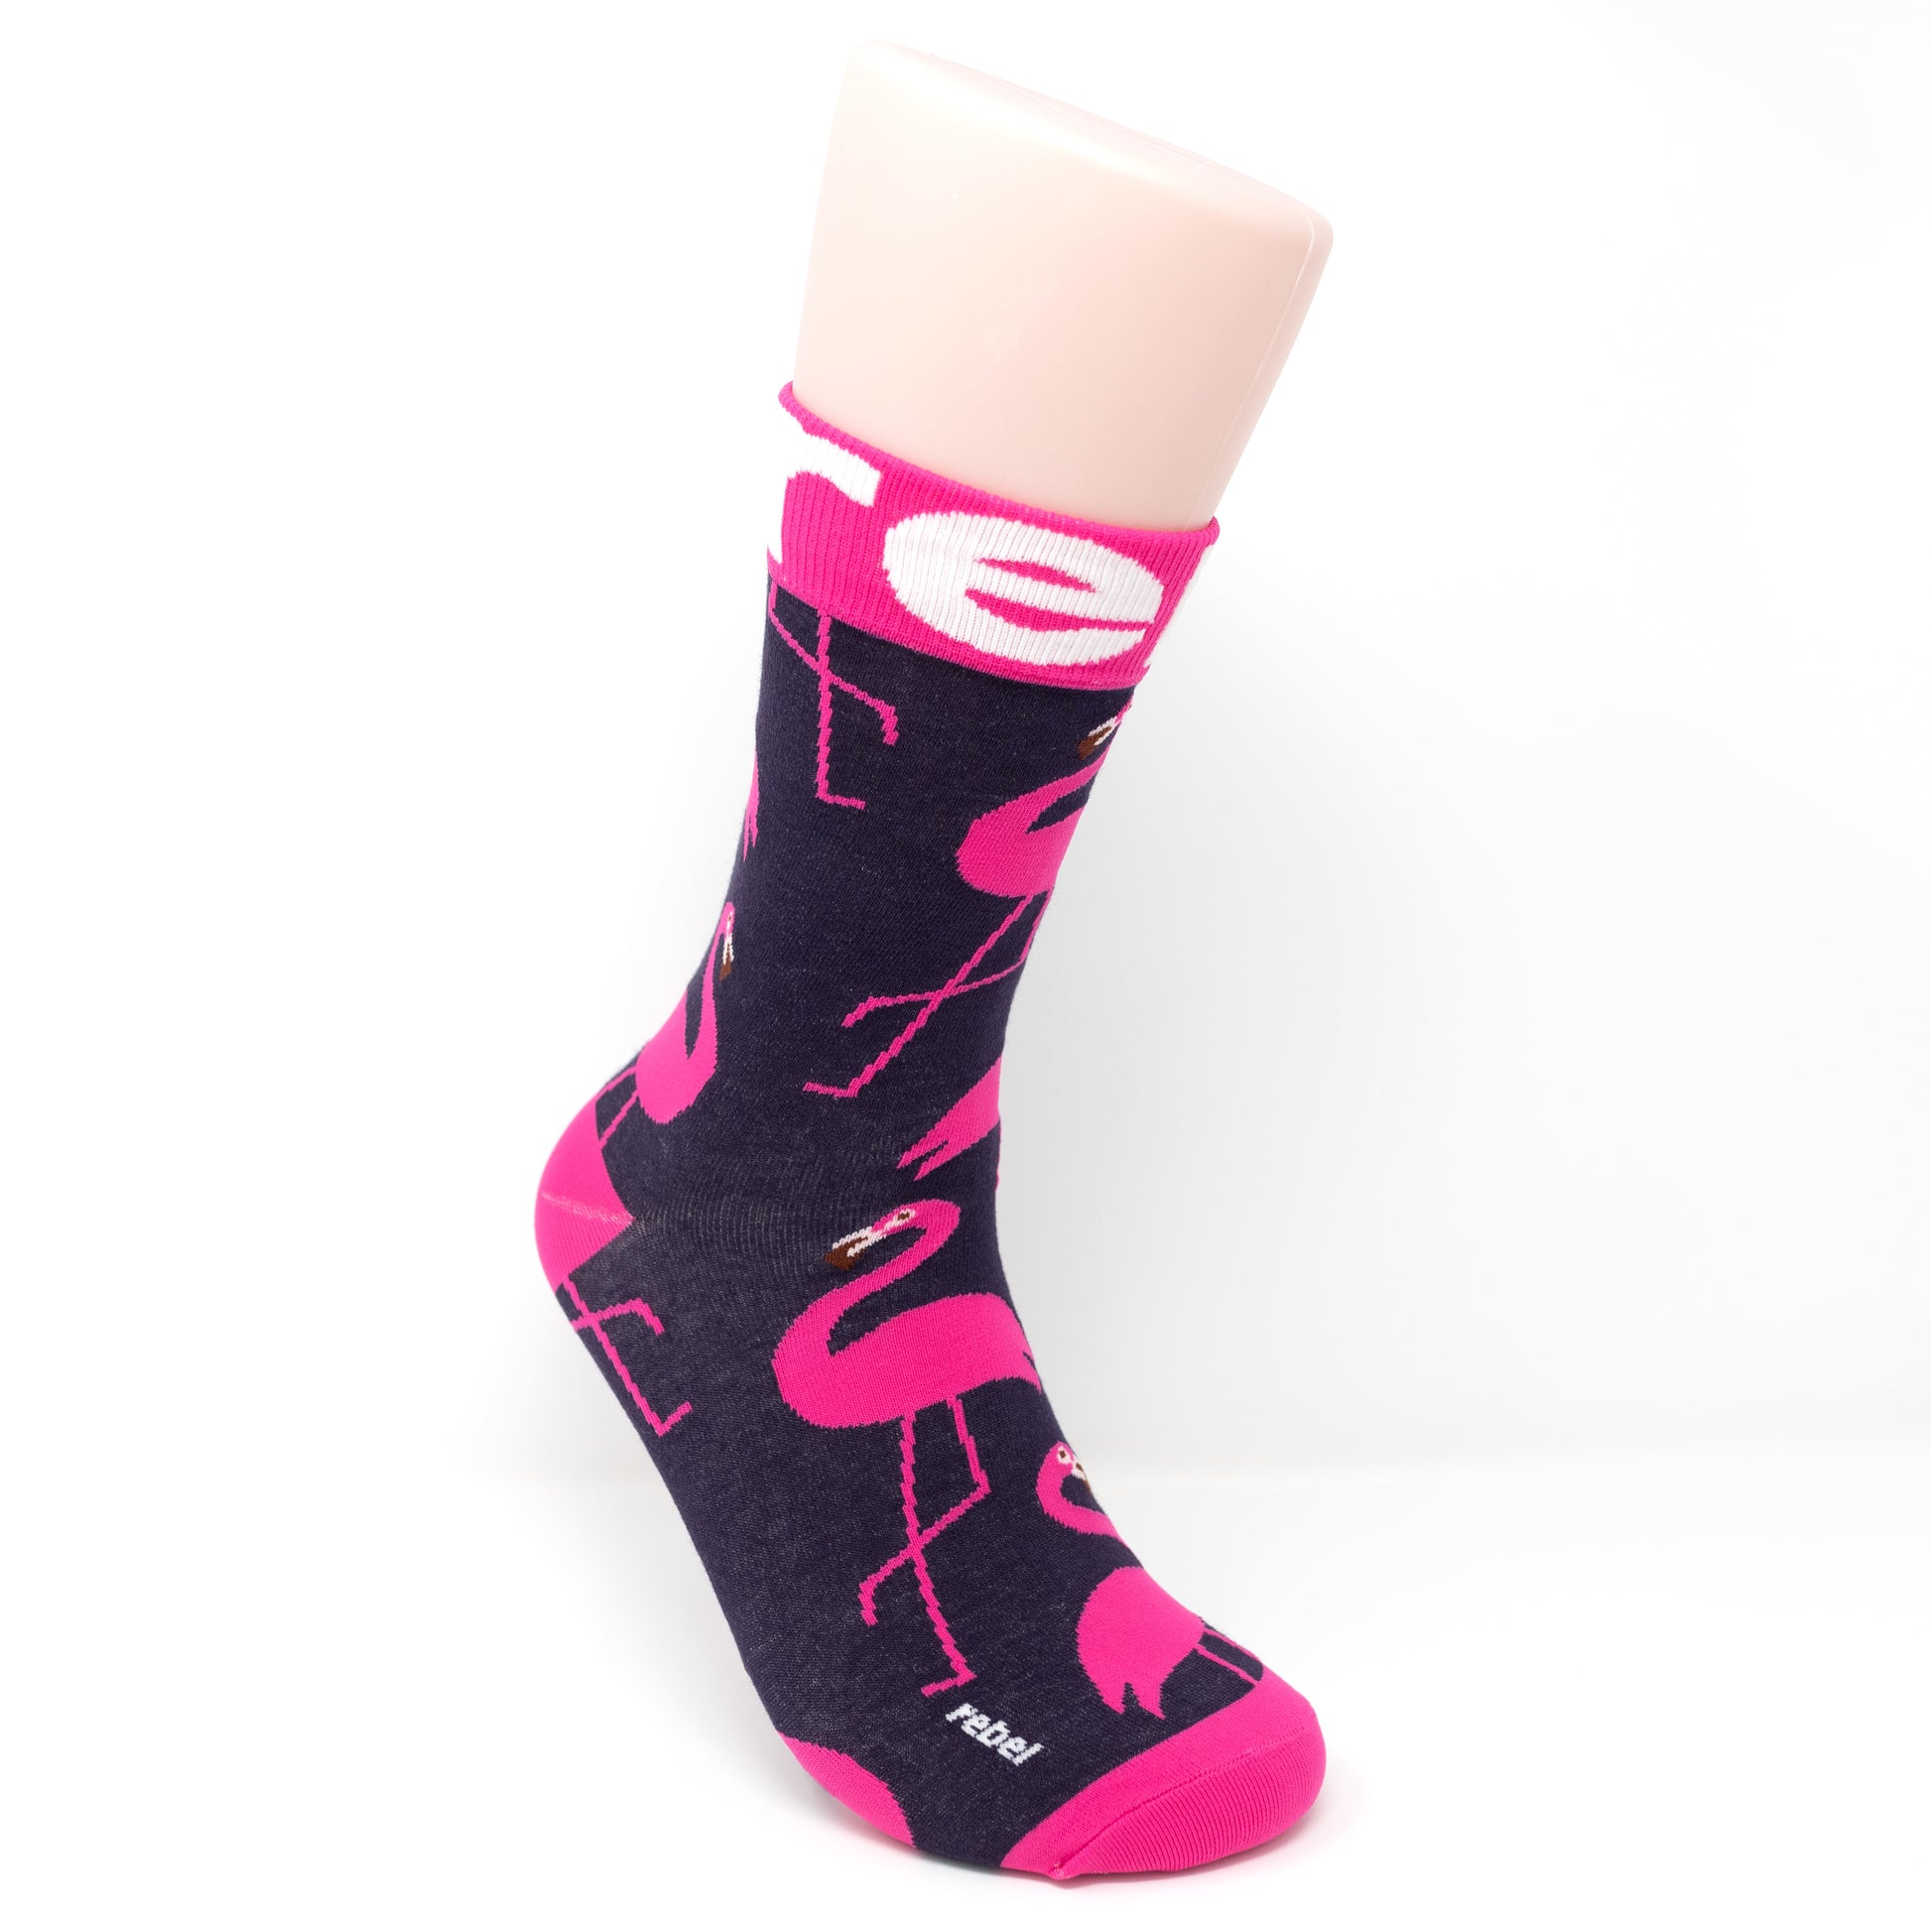 Rebel Fashion's Funky Flamingo Socks